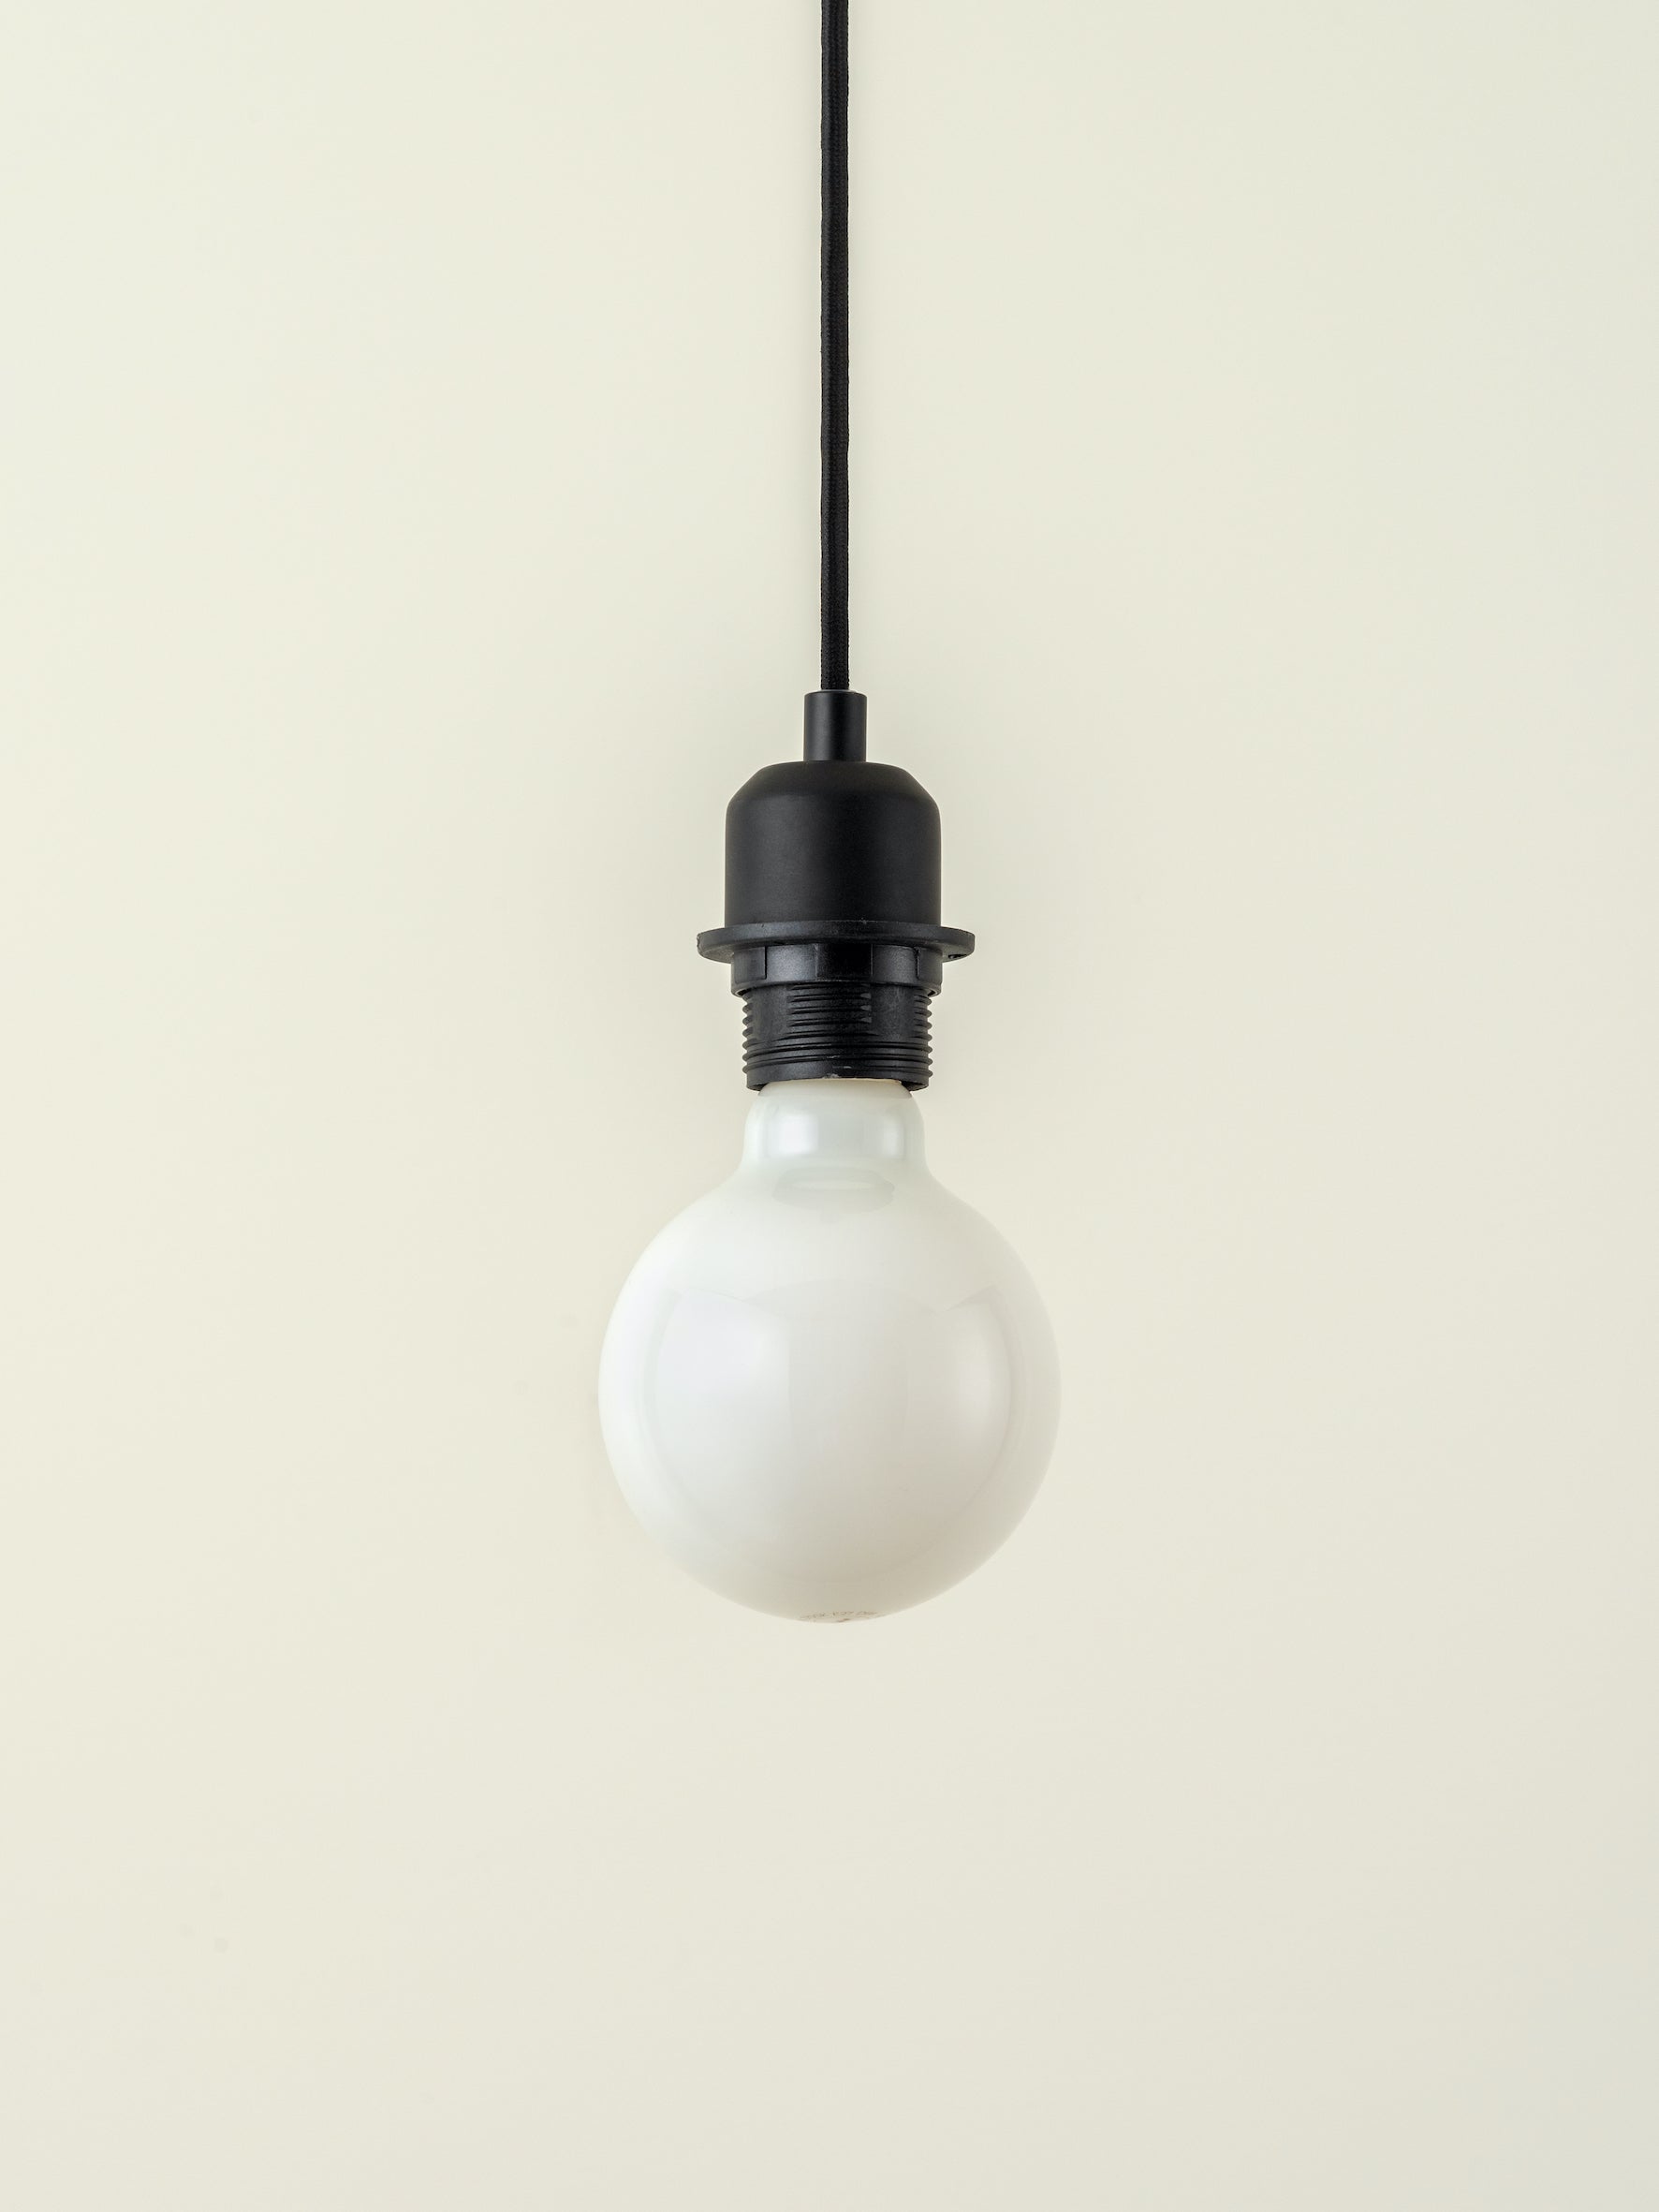 Capel - 1 light matt black drop cap lampholder kit | Ceiling Light | Lights & Lamps | UK